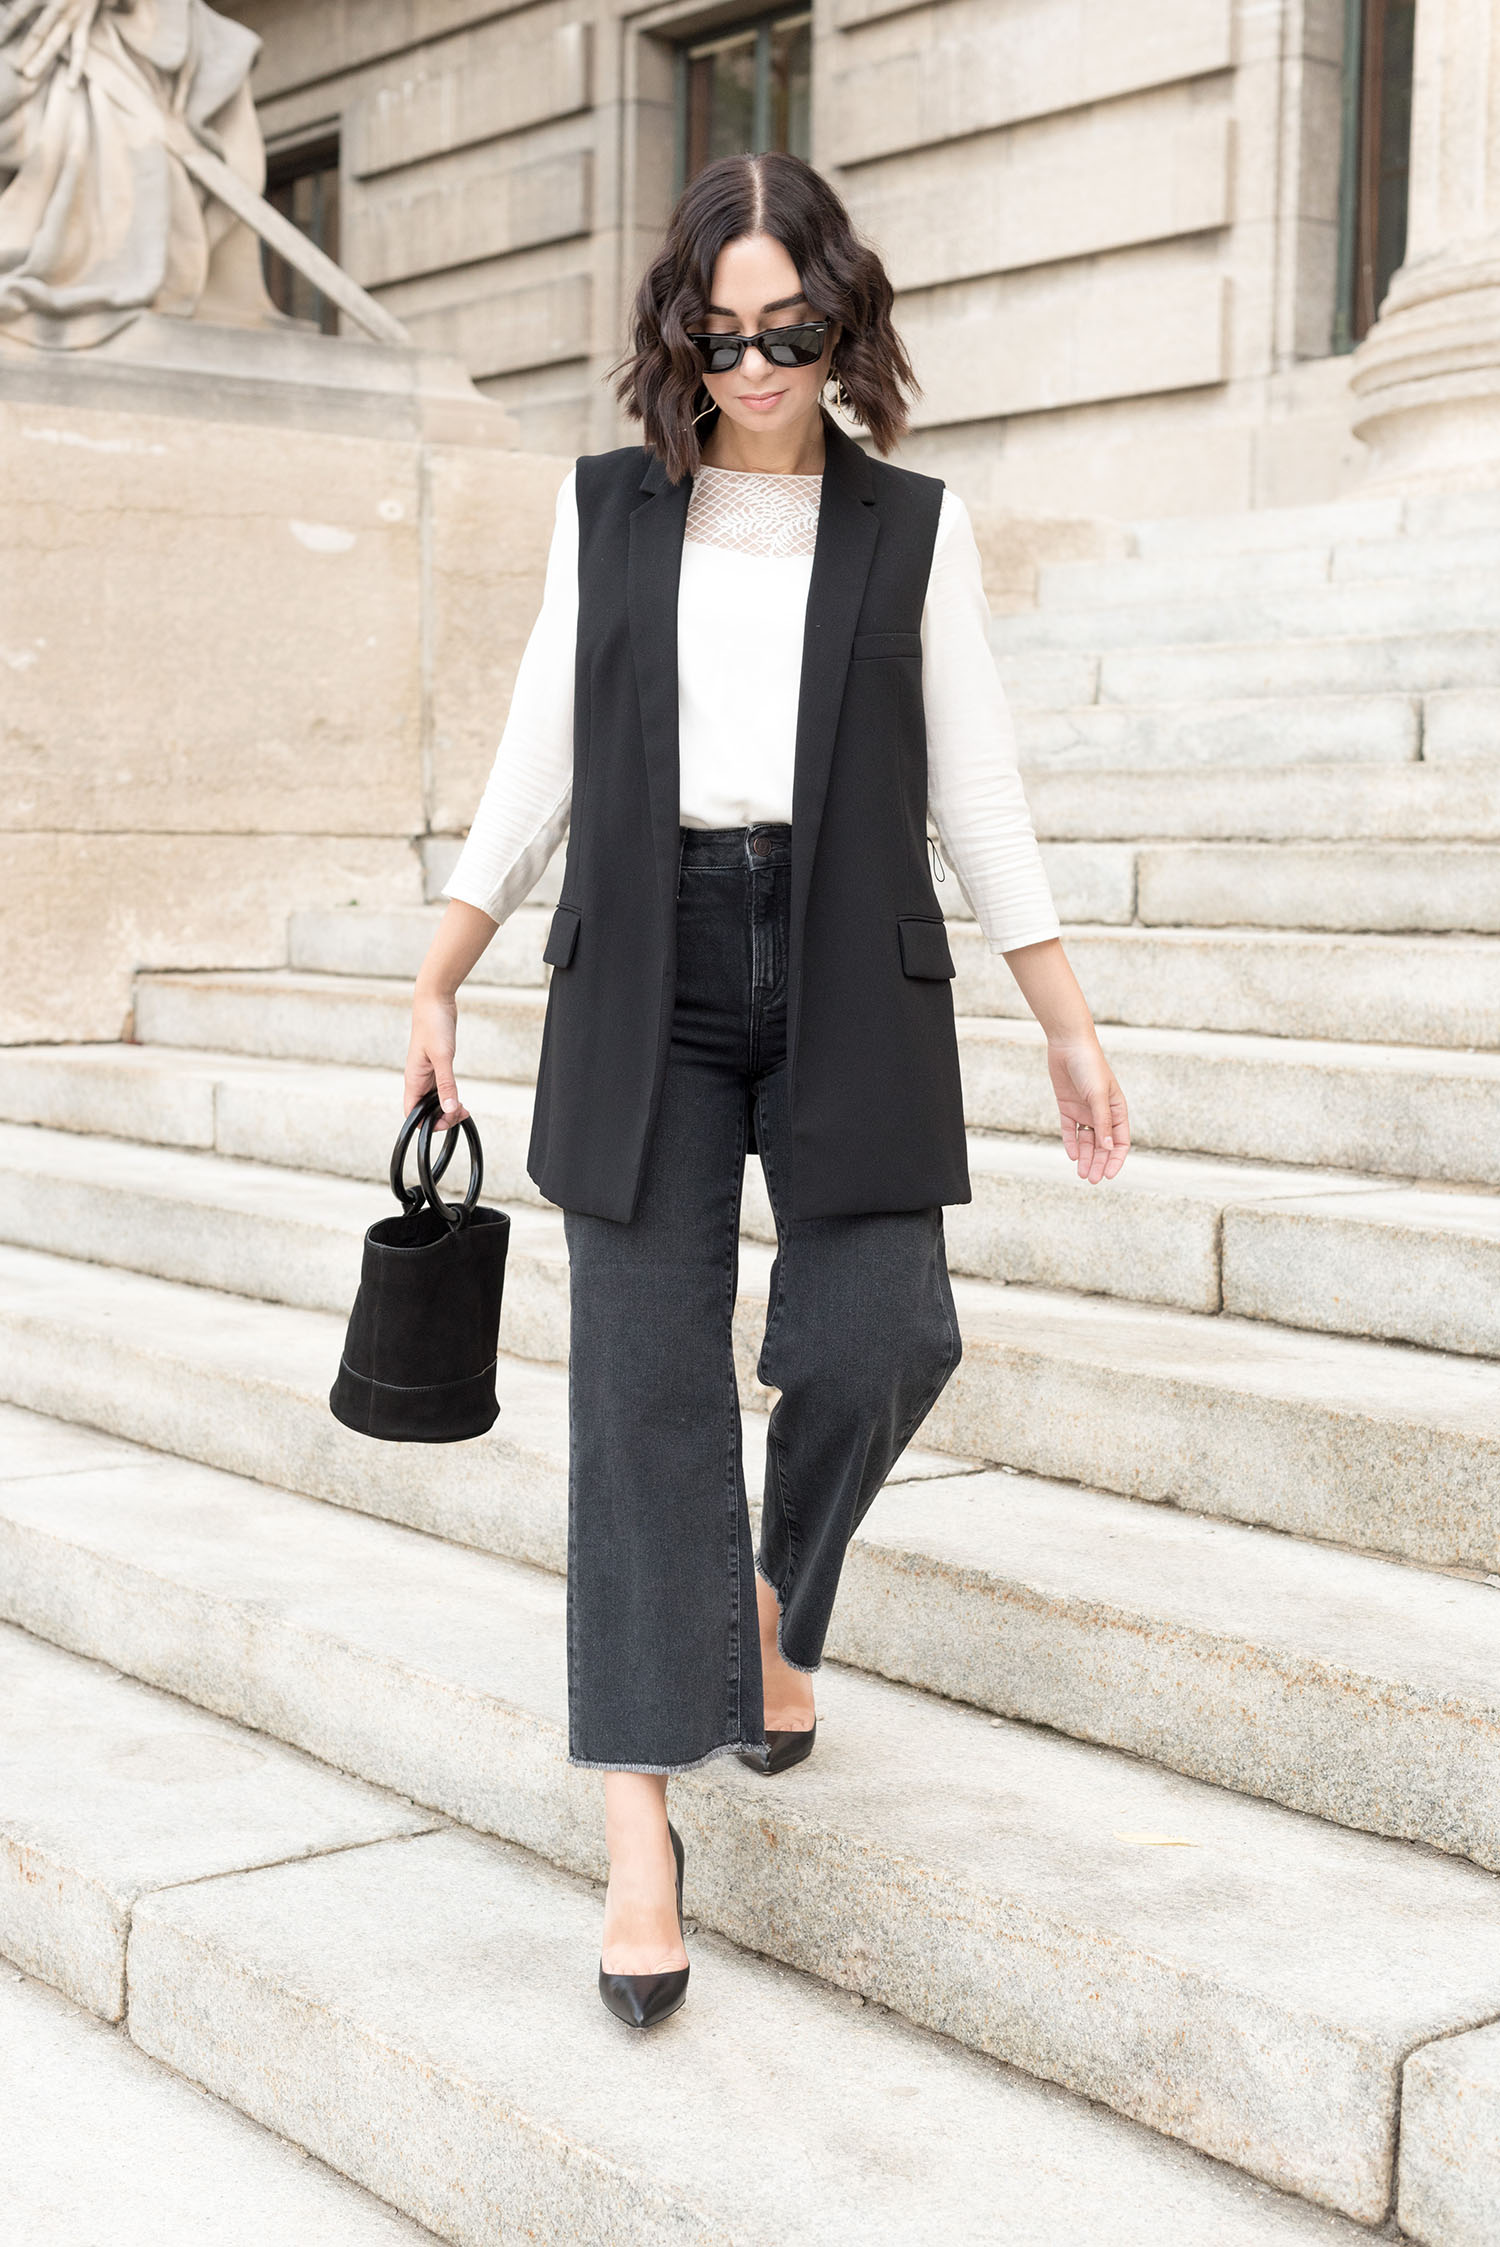 Top Winnipeg fashion blogger Cee Fardoe of Coco & Vera walks wearing Mavi jeans and a Zara vest